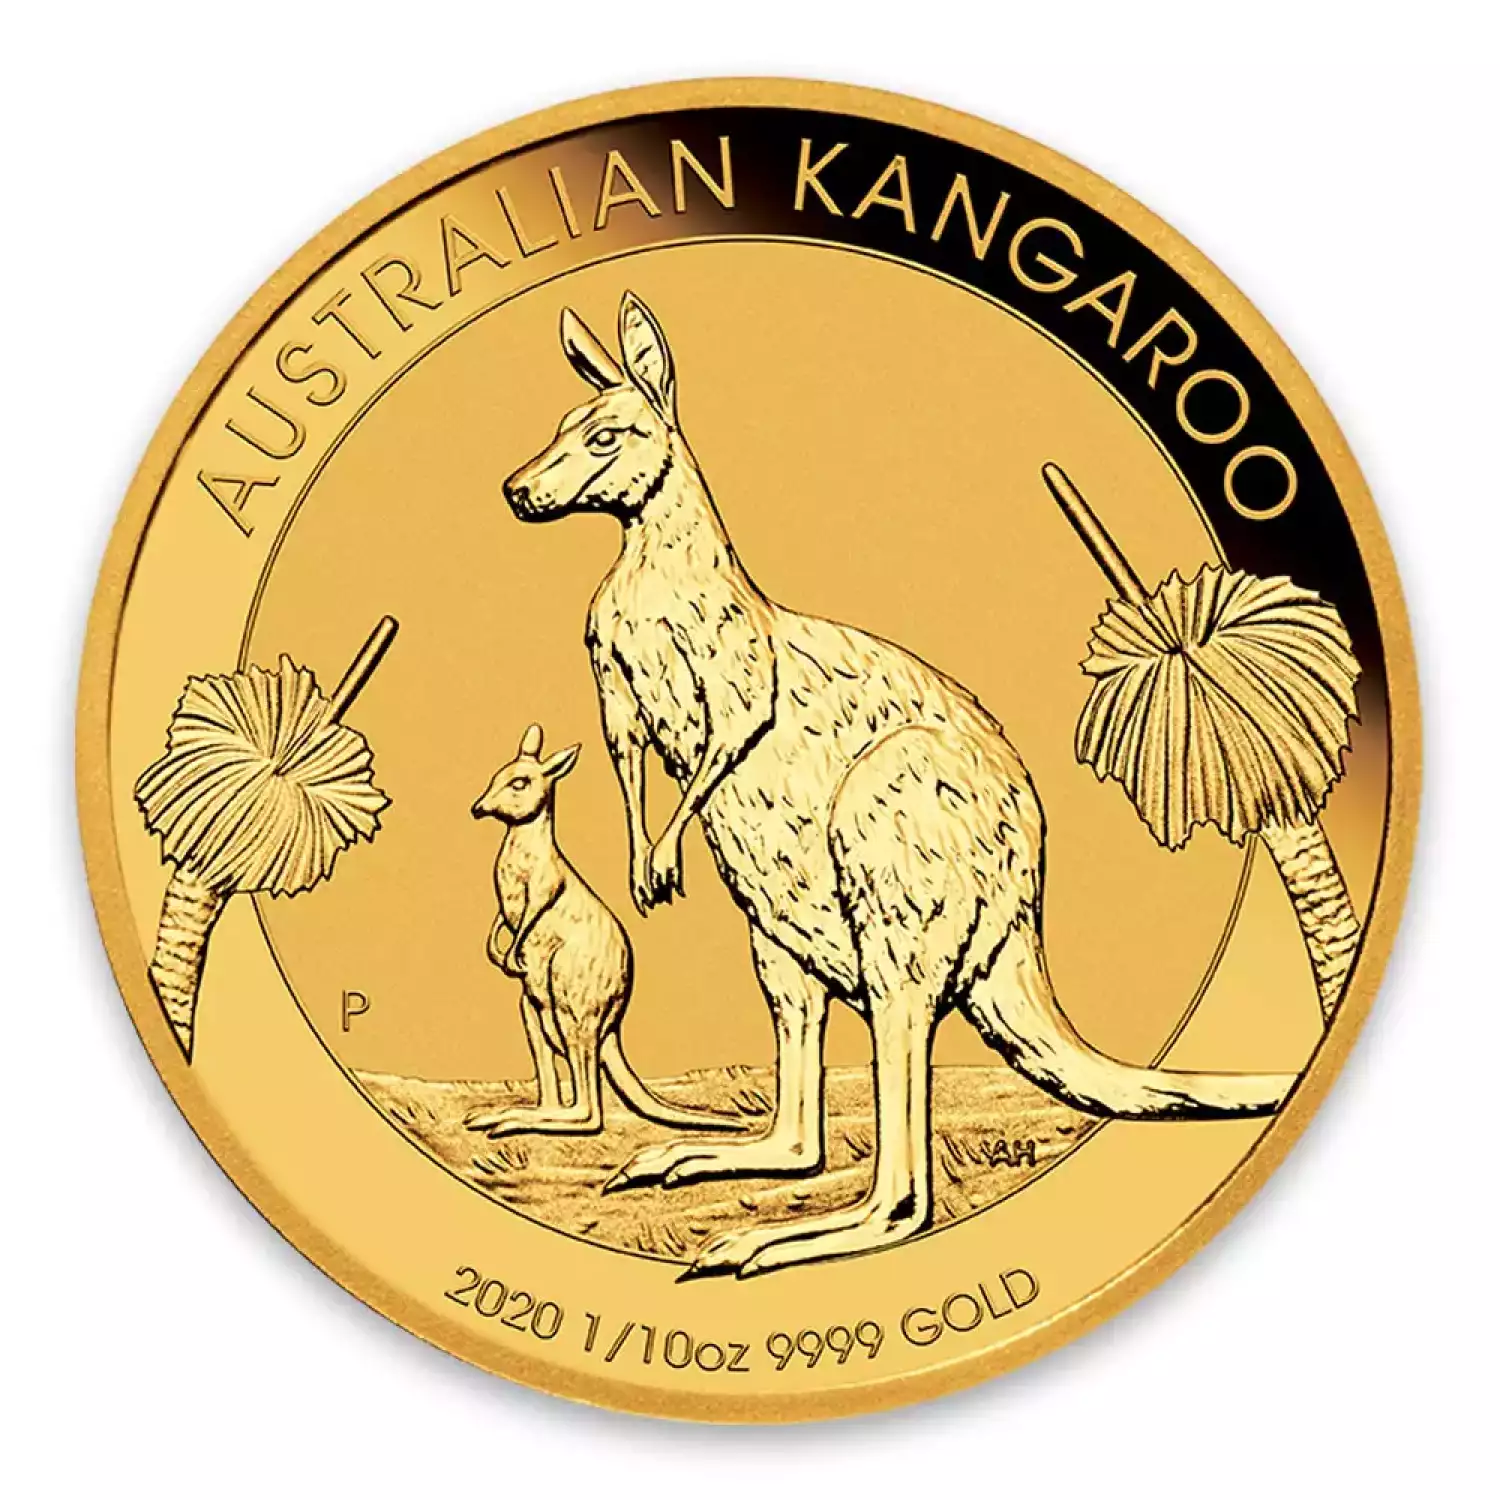 2020 1/10oz Australian Perth Mint Gold Kangaroo (2)